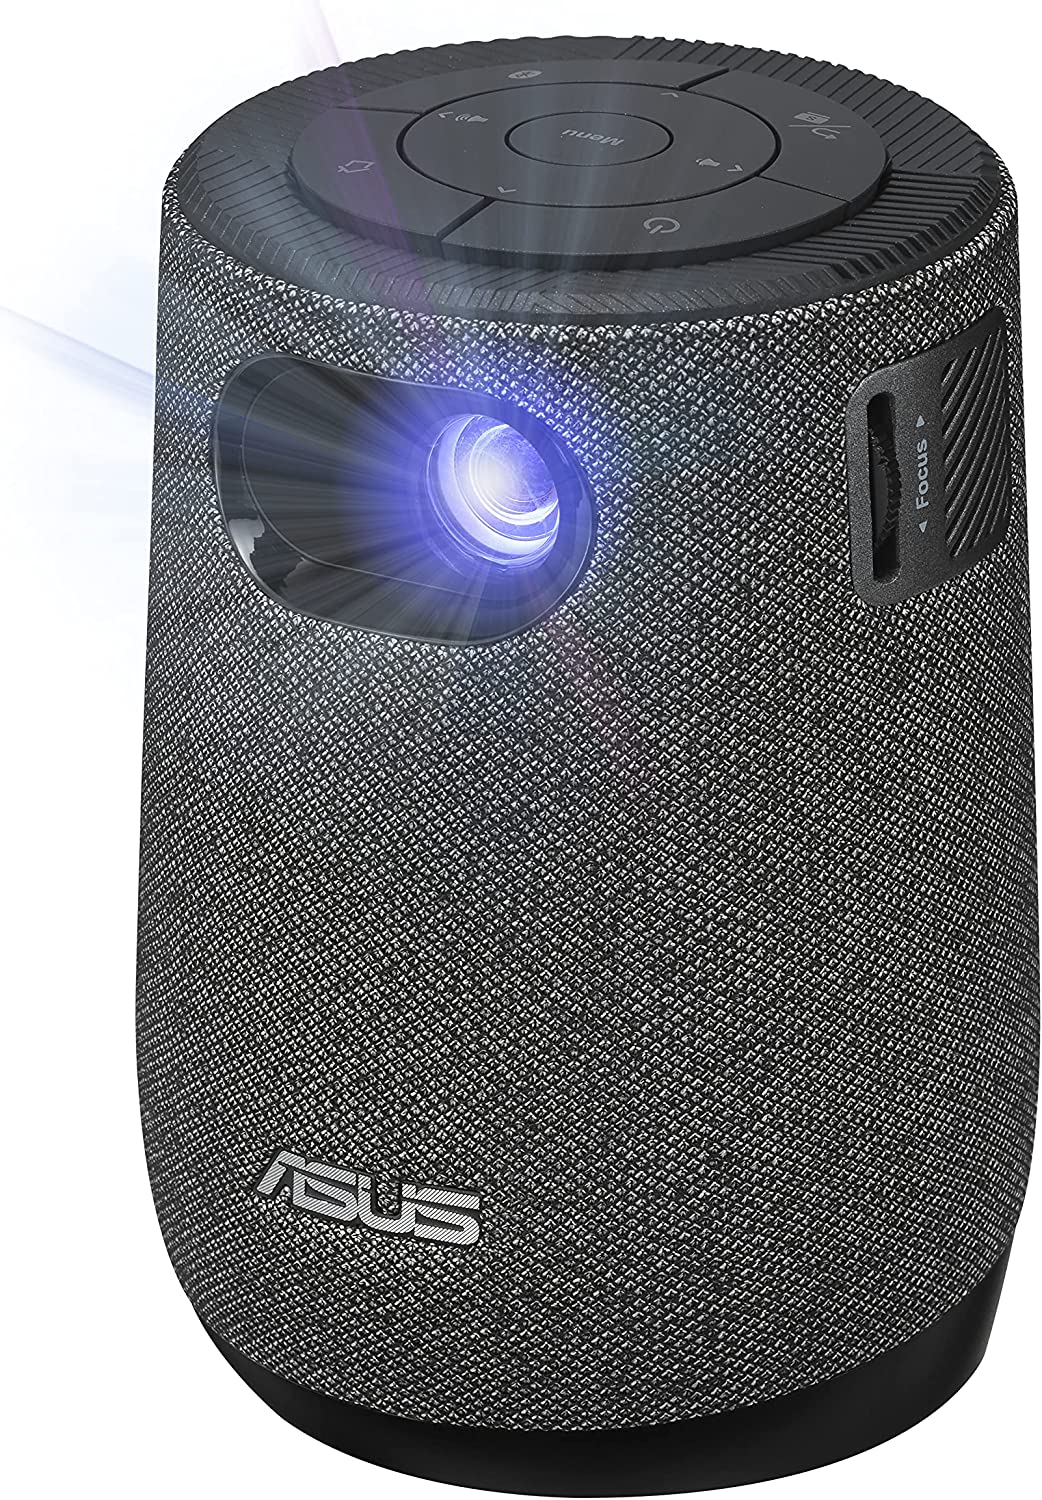 Asus ZenBeam Latte L1 Projecteur LED Portable Bluetooth WiFi - Harman Kardon Audio - HDMI, USB - 300 Lumens